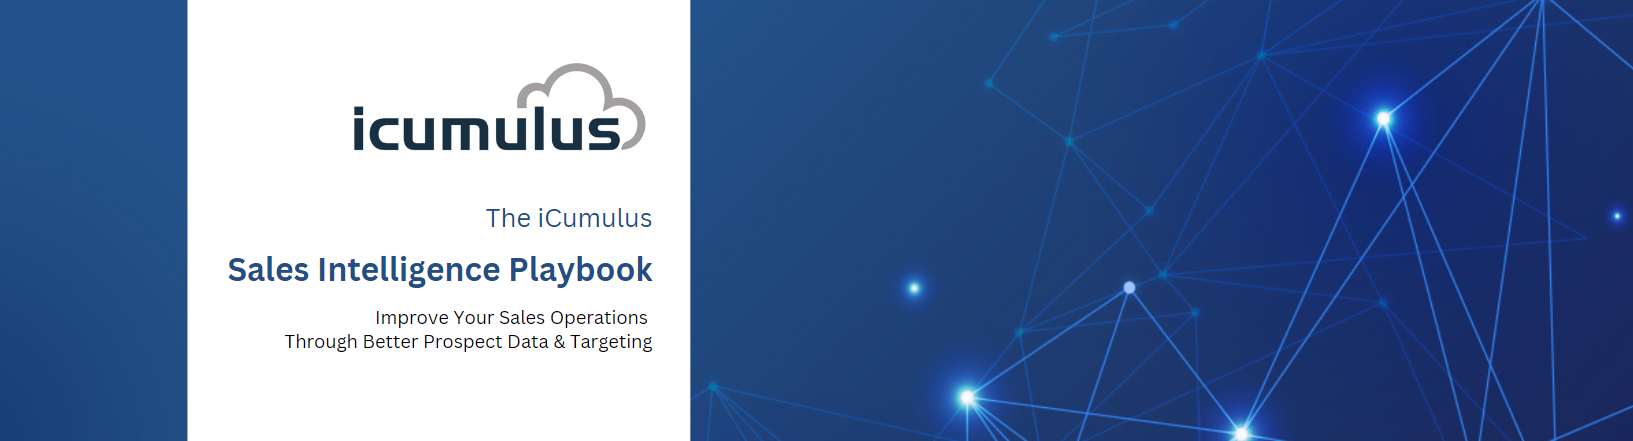 iCumulus: Sales Intelligence Playbook